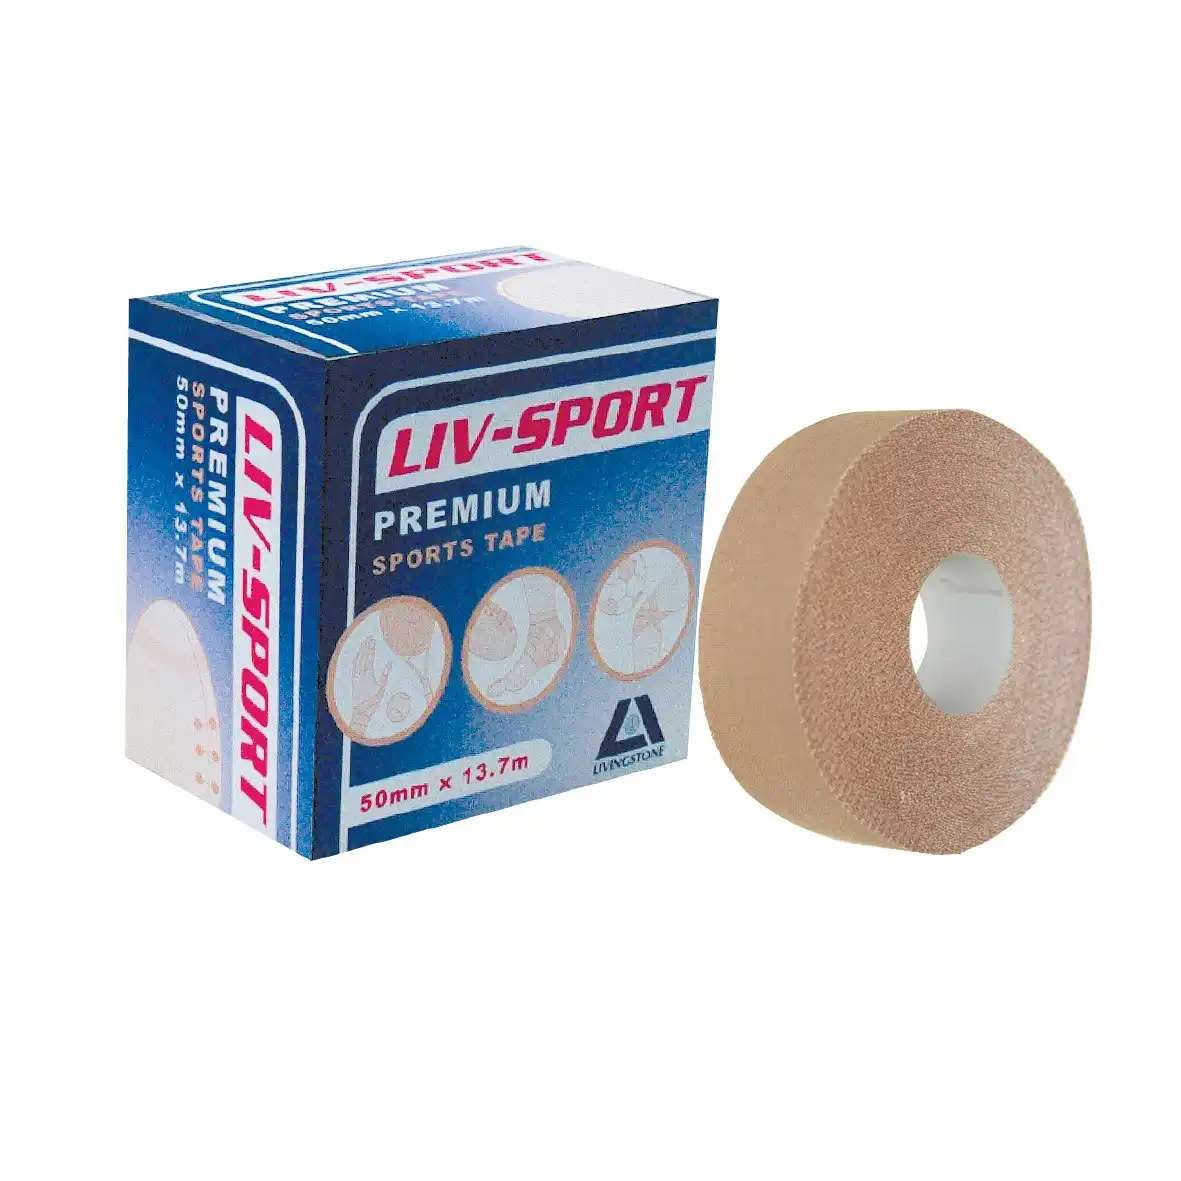 Liv-Sport Premium Rigid Strapping Sports Tape Tan Colour Fabric 25 mm x 13.7m